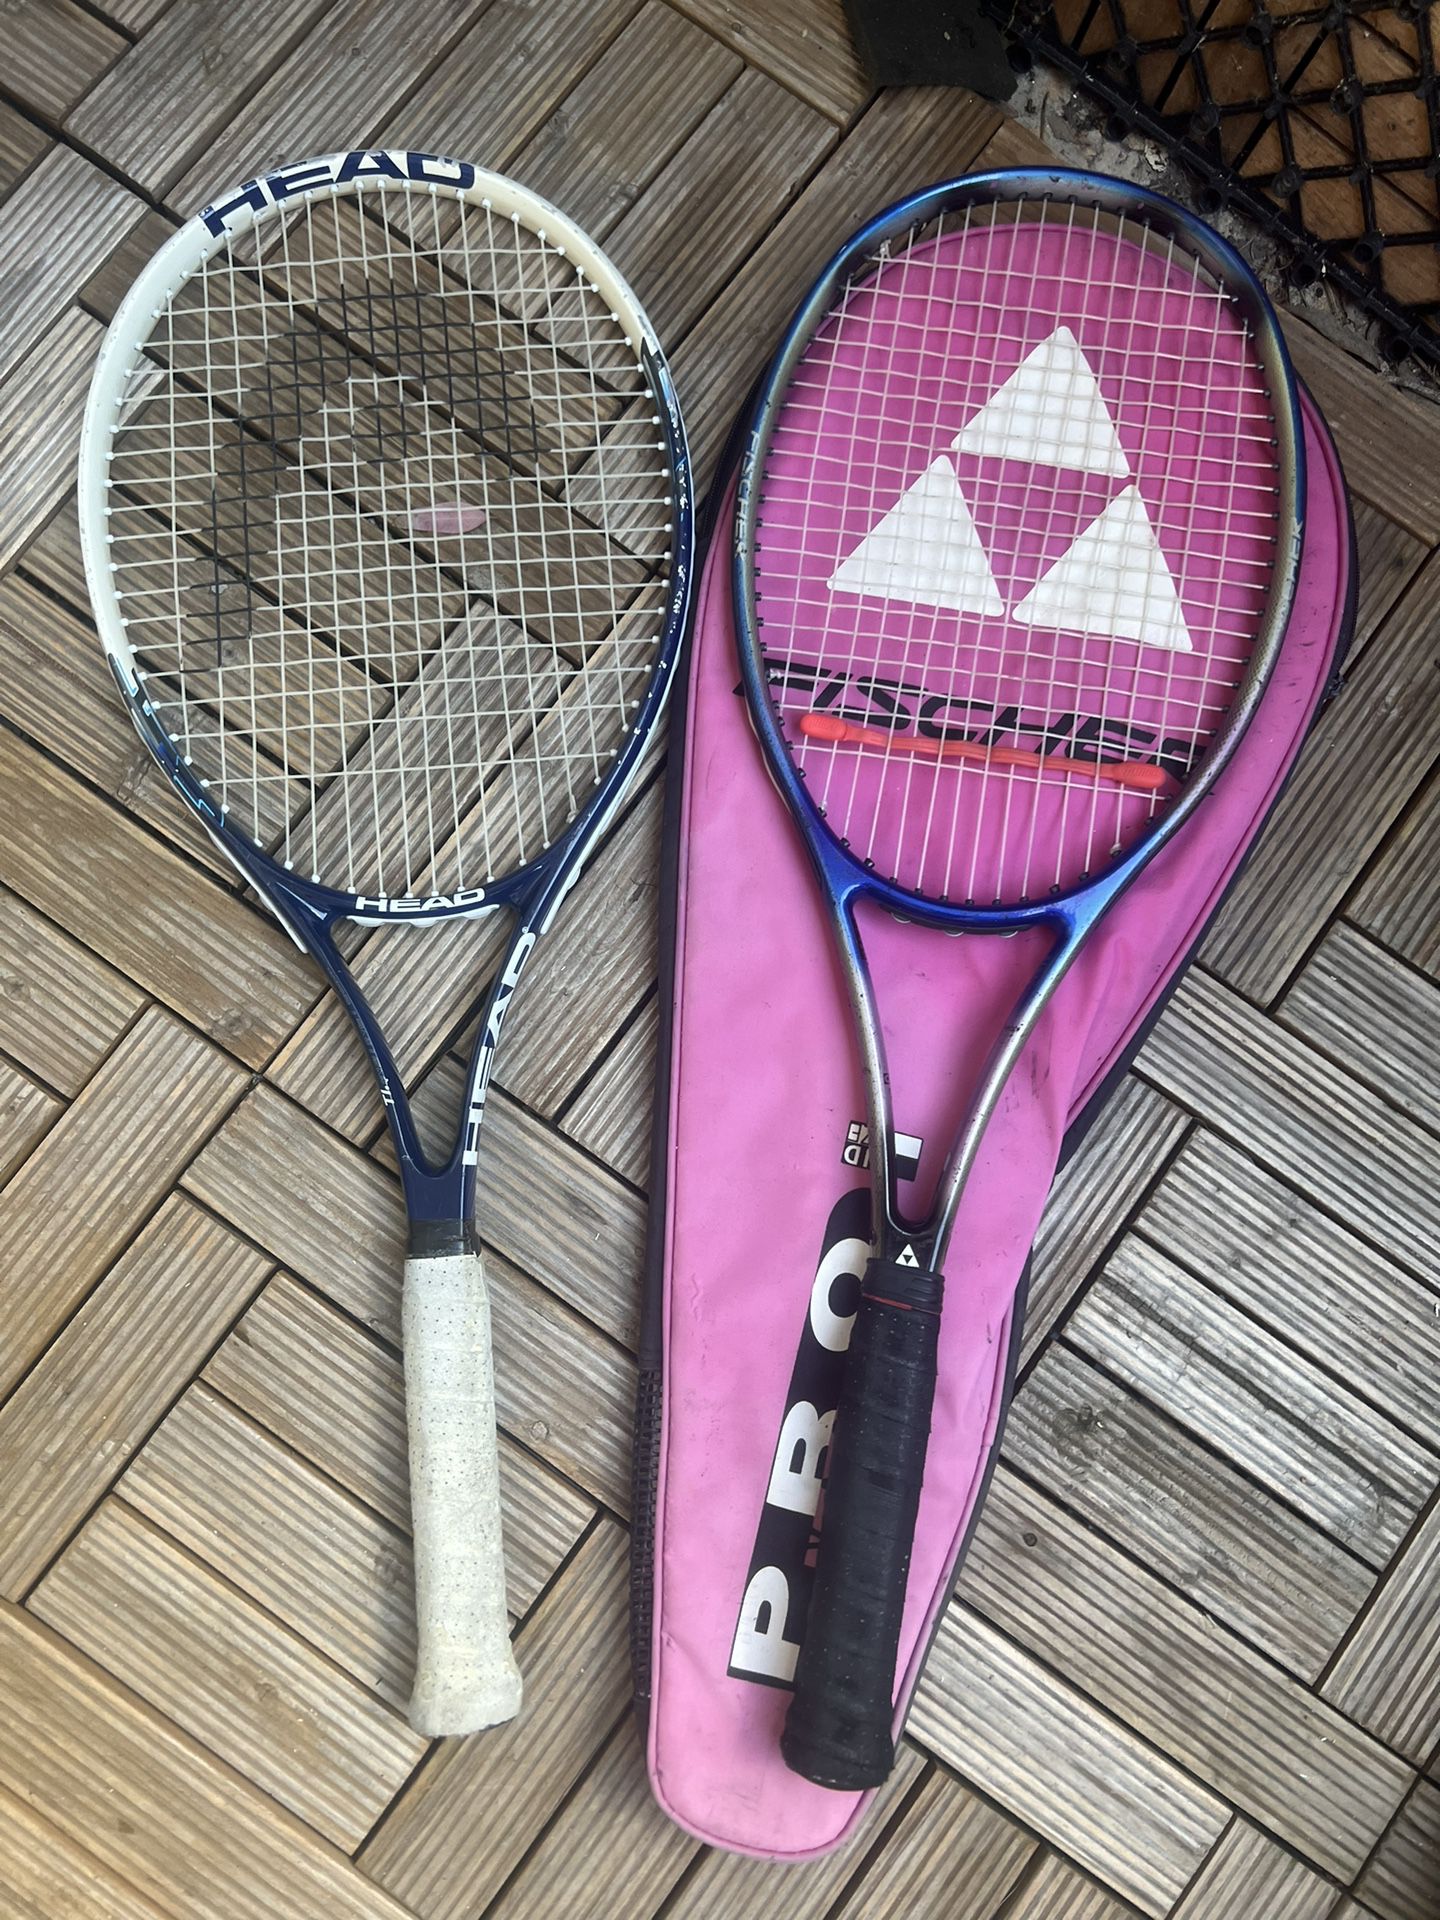 Basic Head Tennis Racket $15